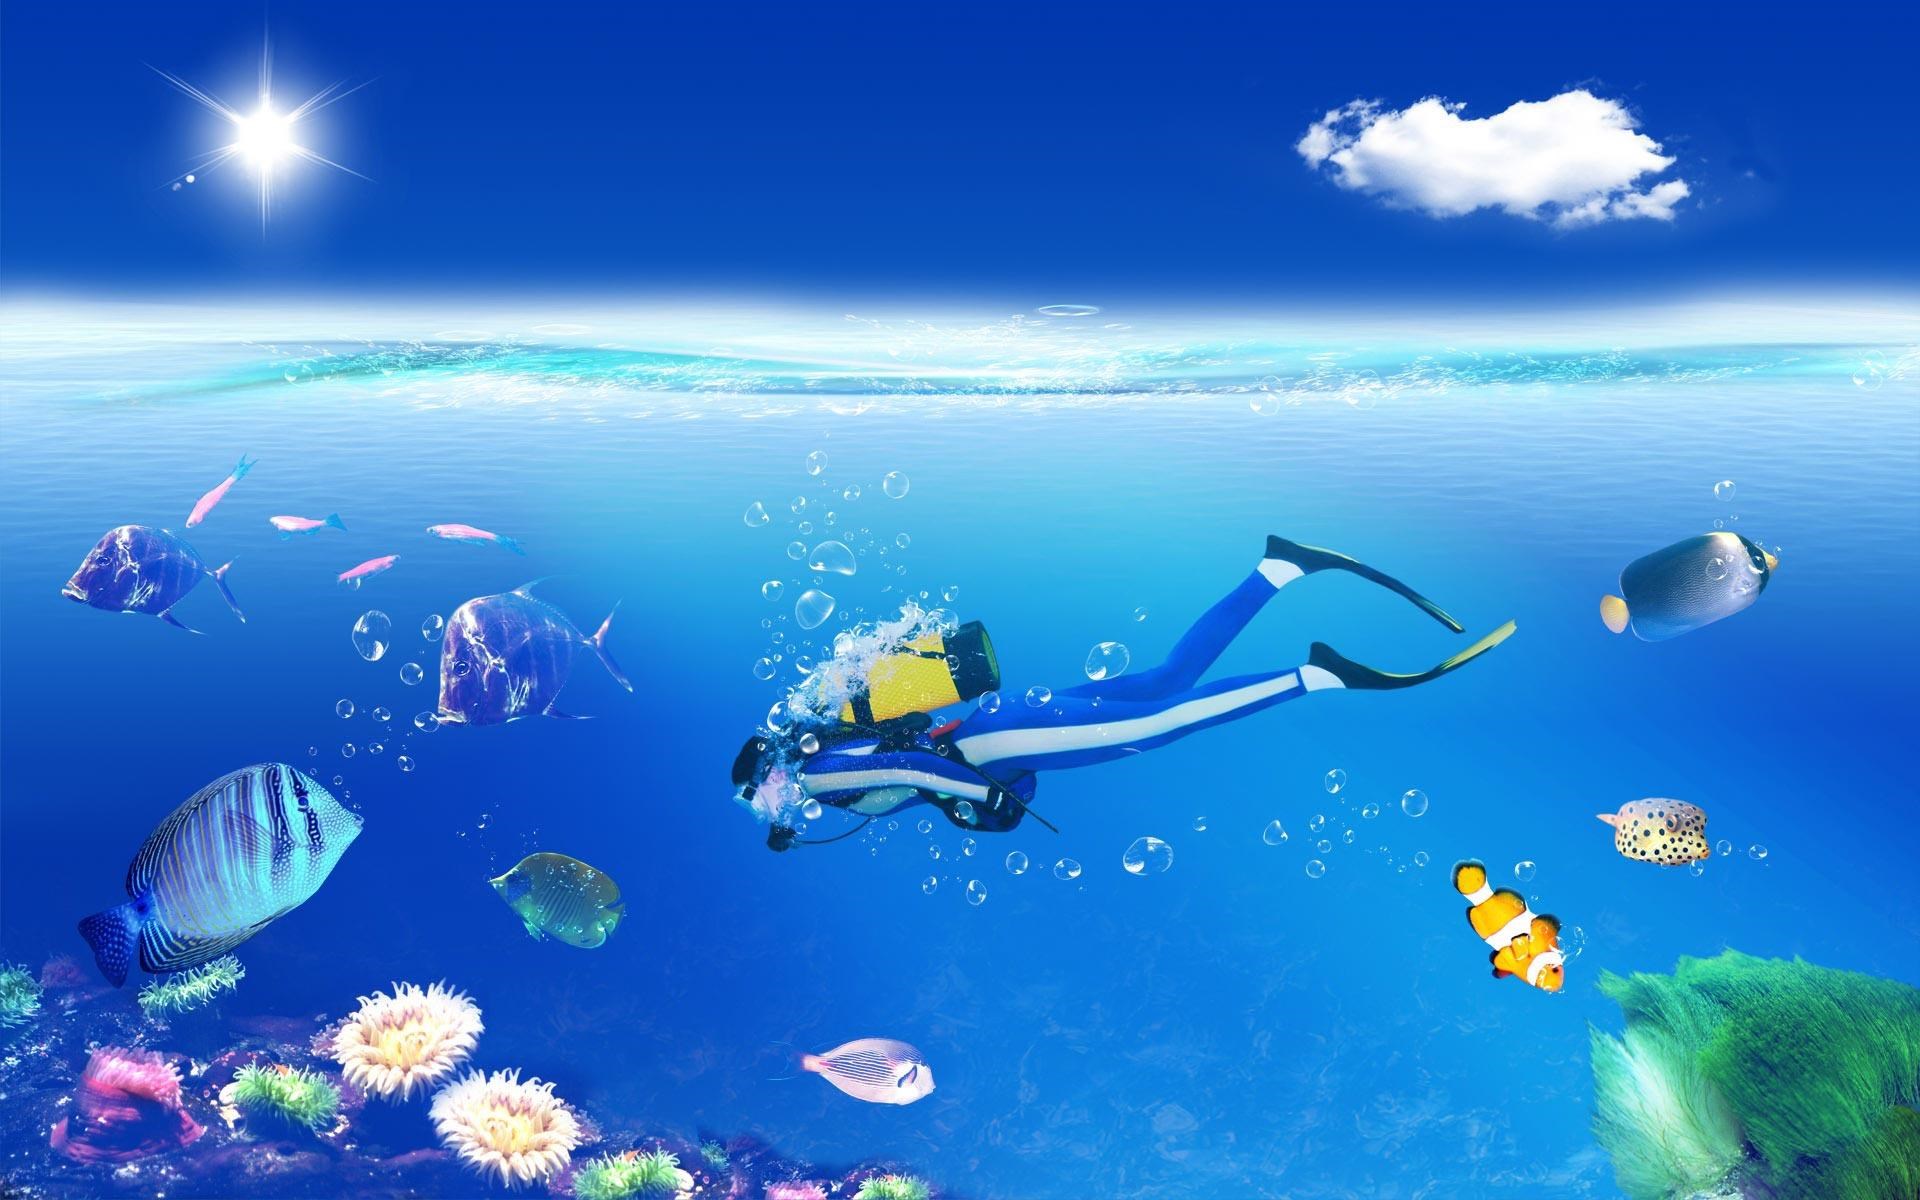 Scuba diver in Ocean 4K Wallpapers  HD Wallpapers  ID 25800